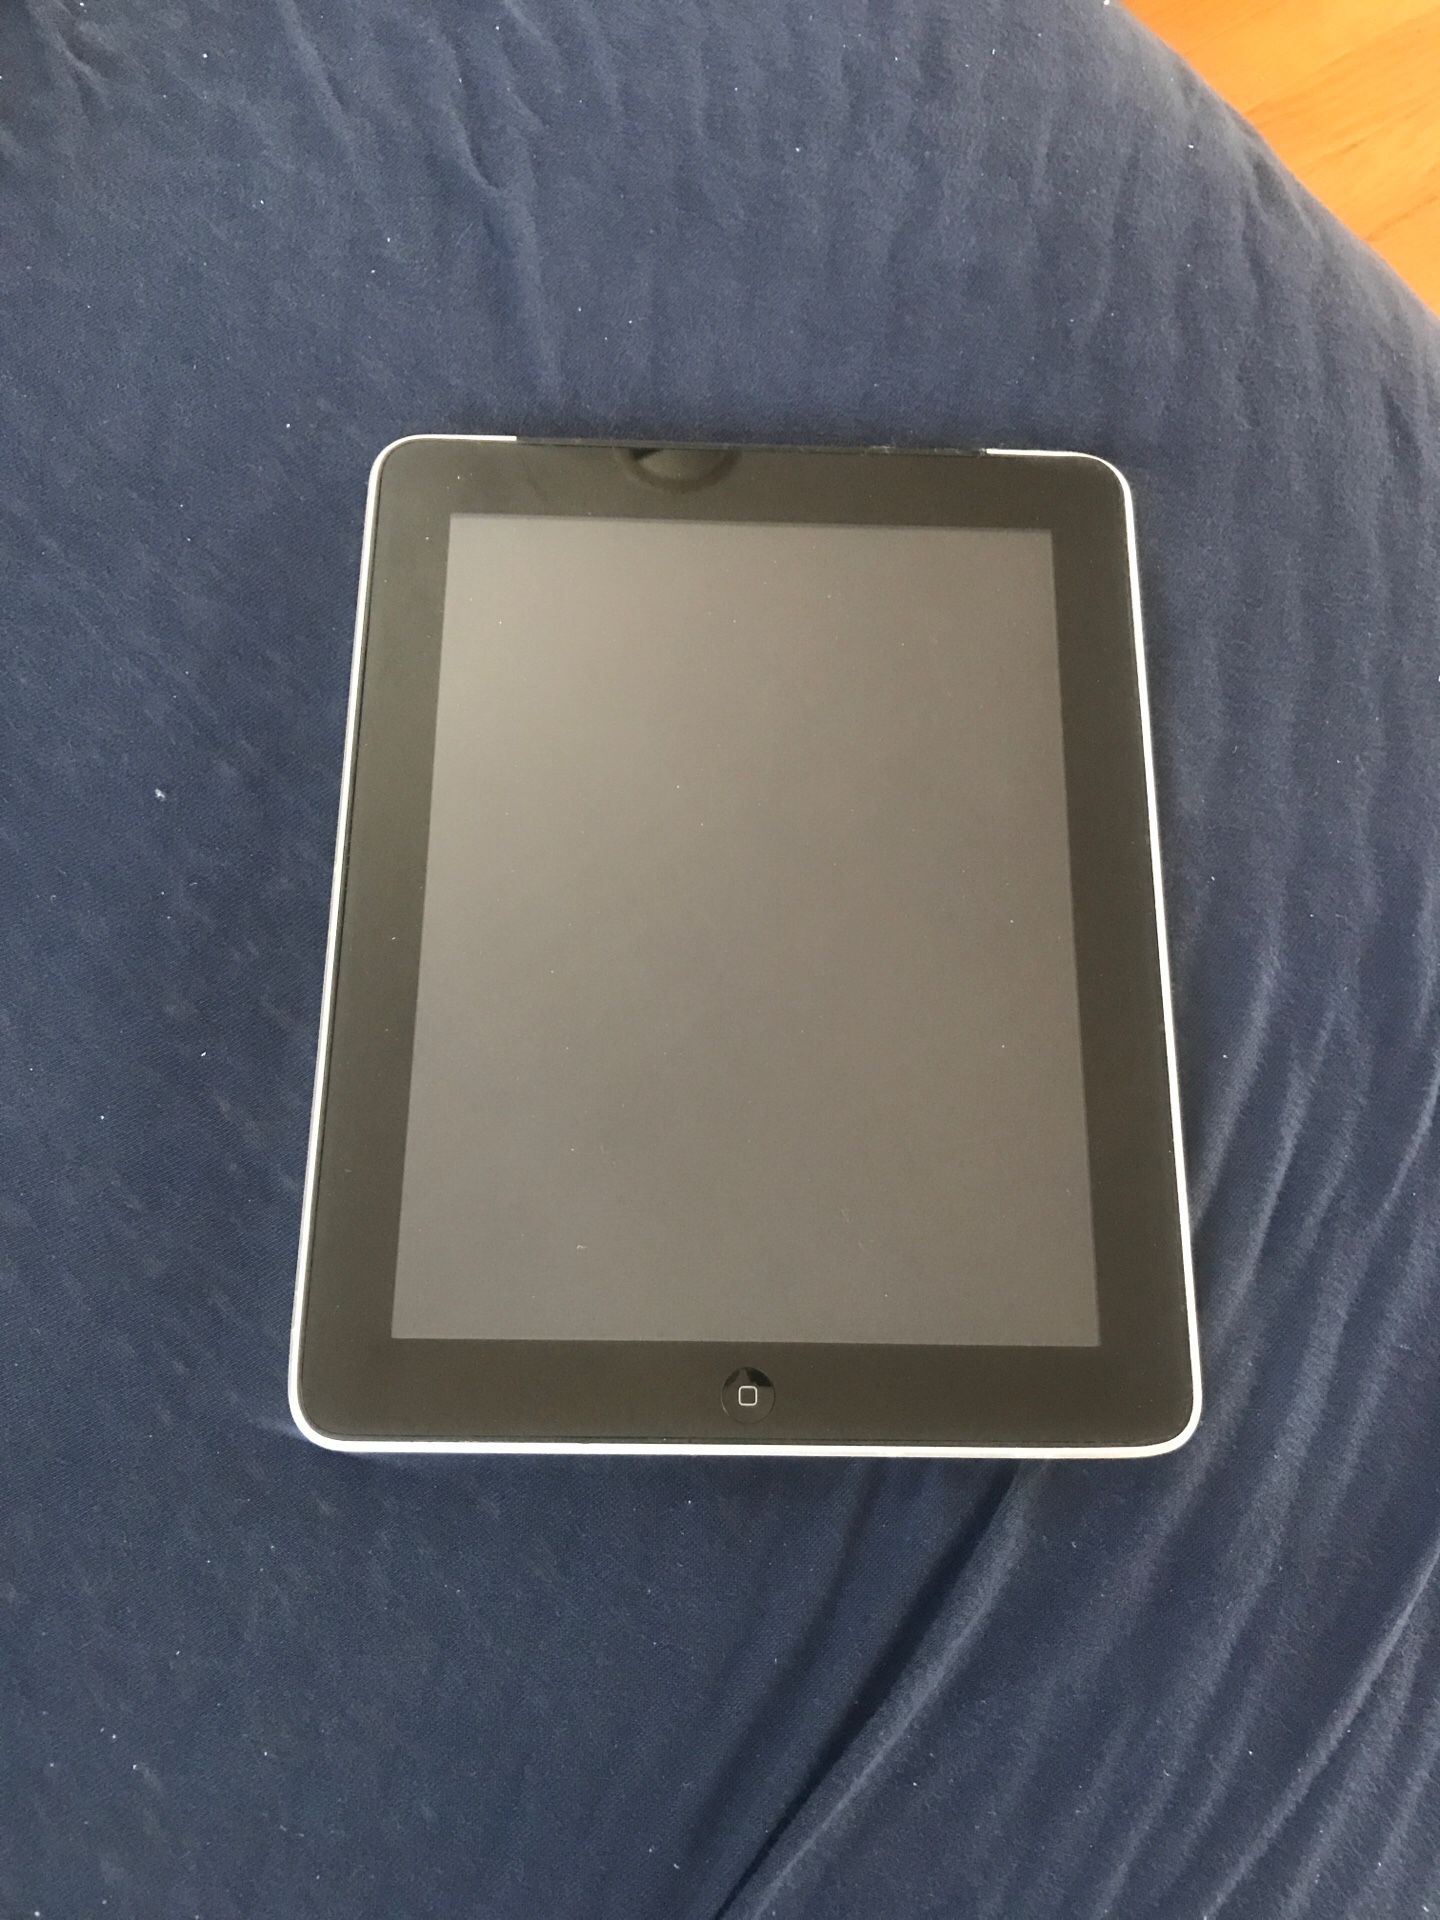 iPad 16GB model A1337